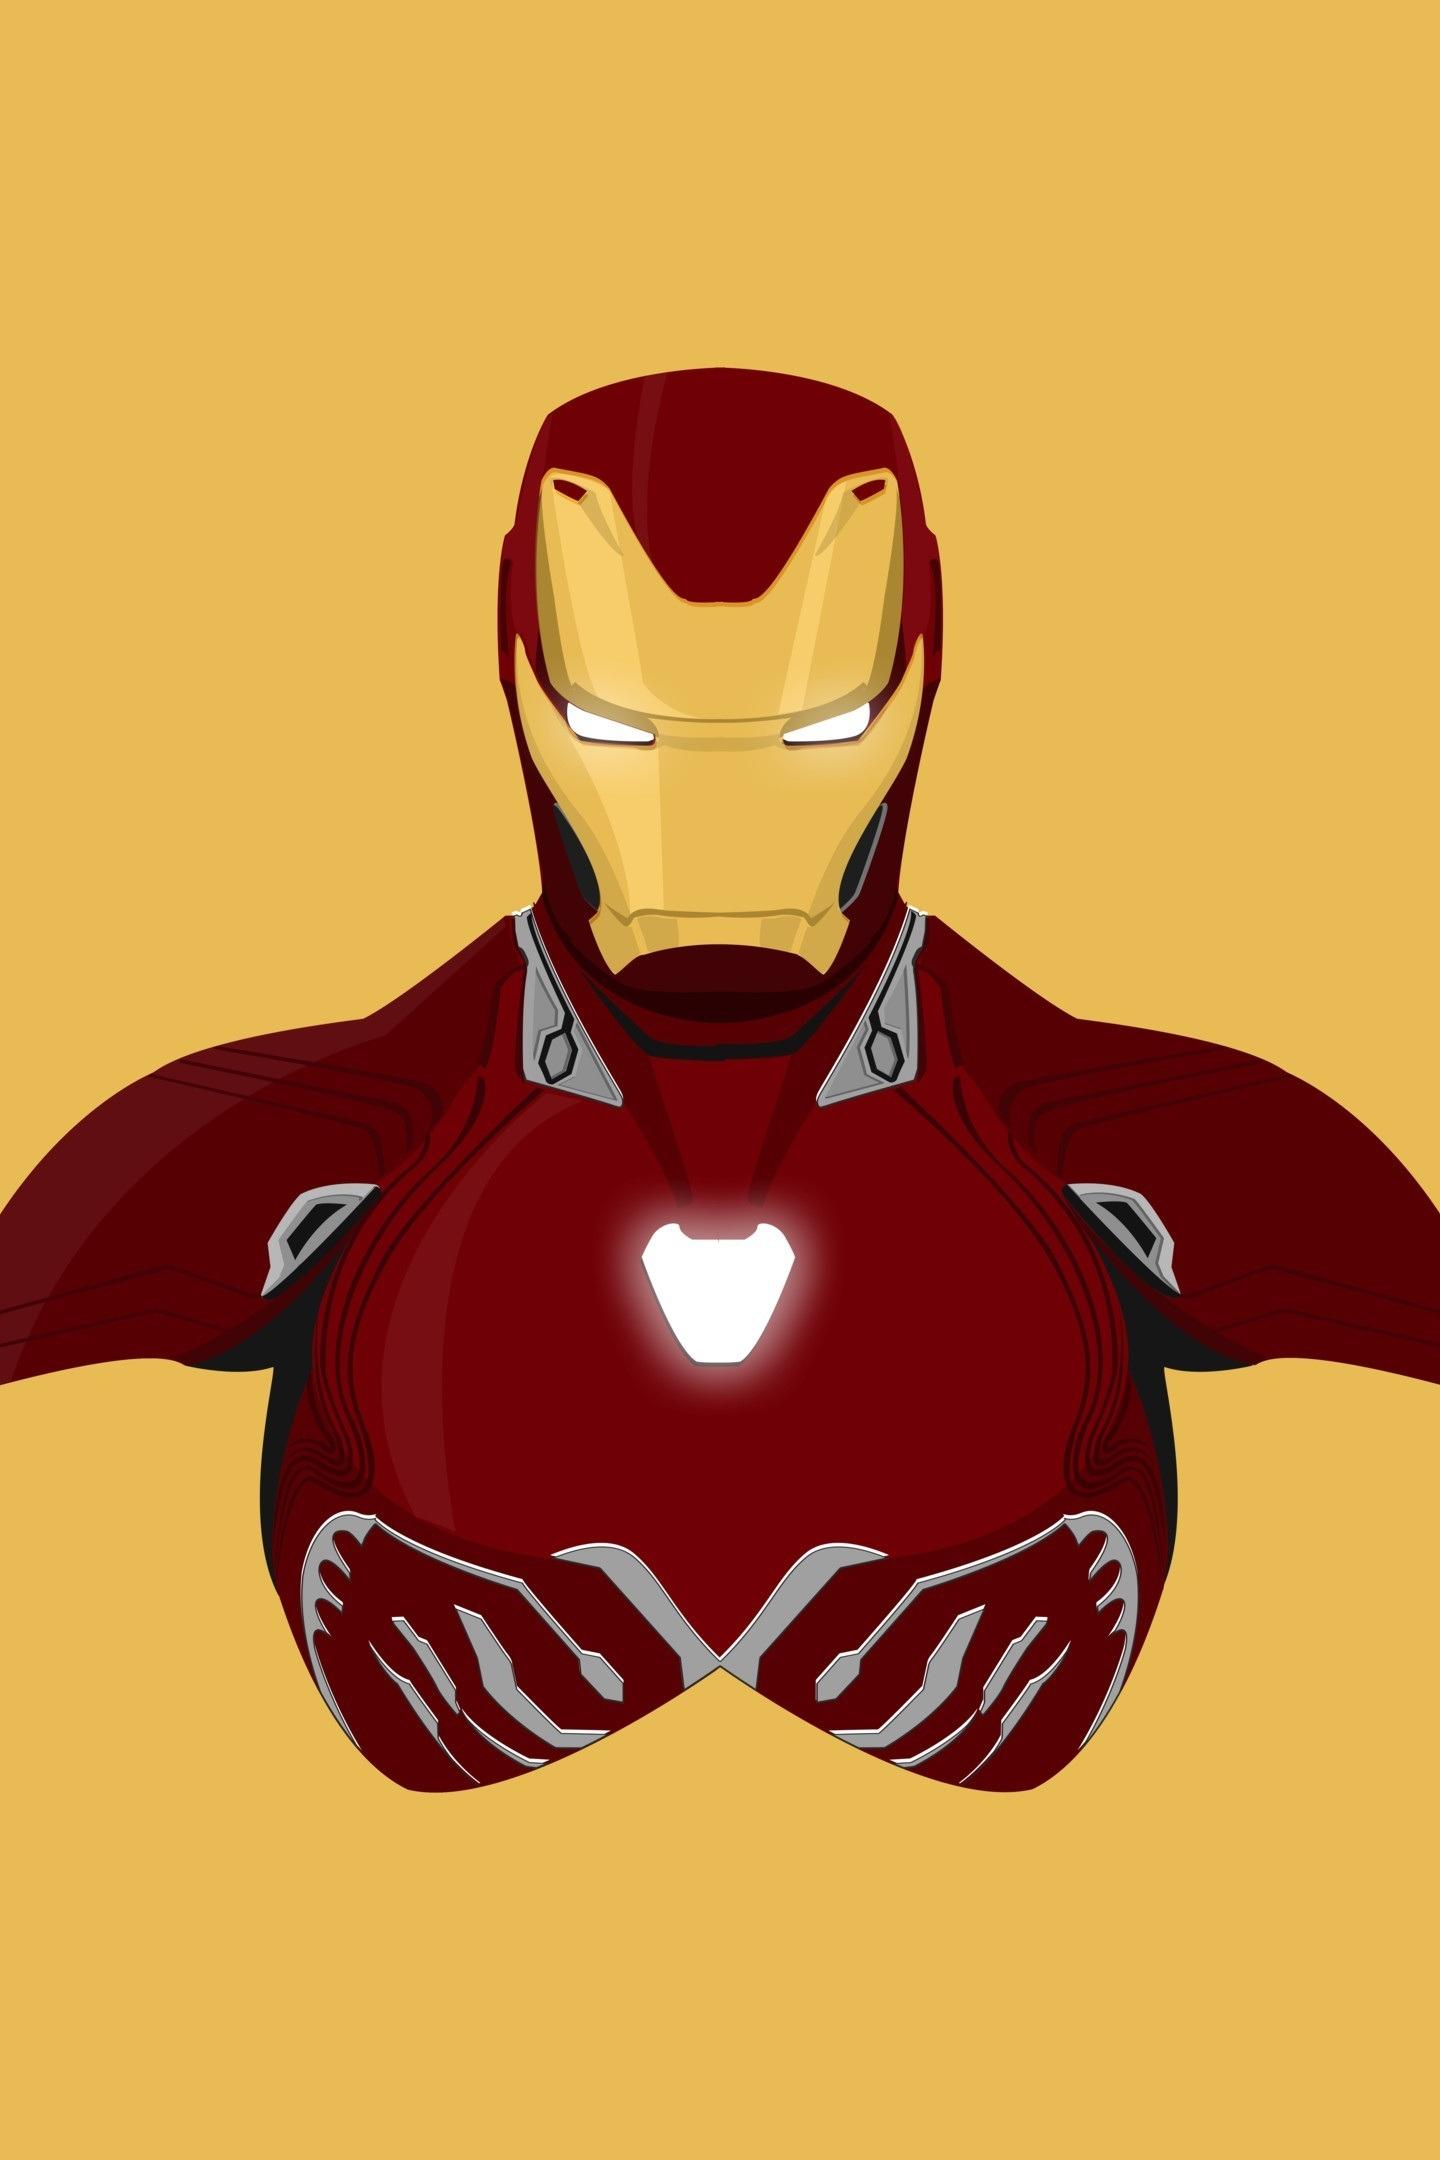 Download 1440x2960 wallpaper iron man, superhero, minimal, iron suit, samsung galaxy s samsung galaxy s8 plus, 1440x2960 HD image, background, 3627